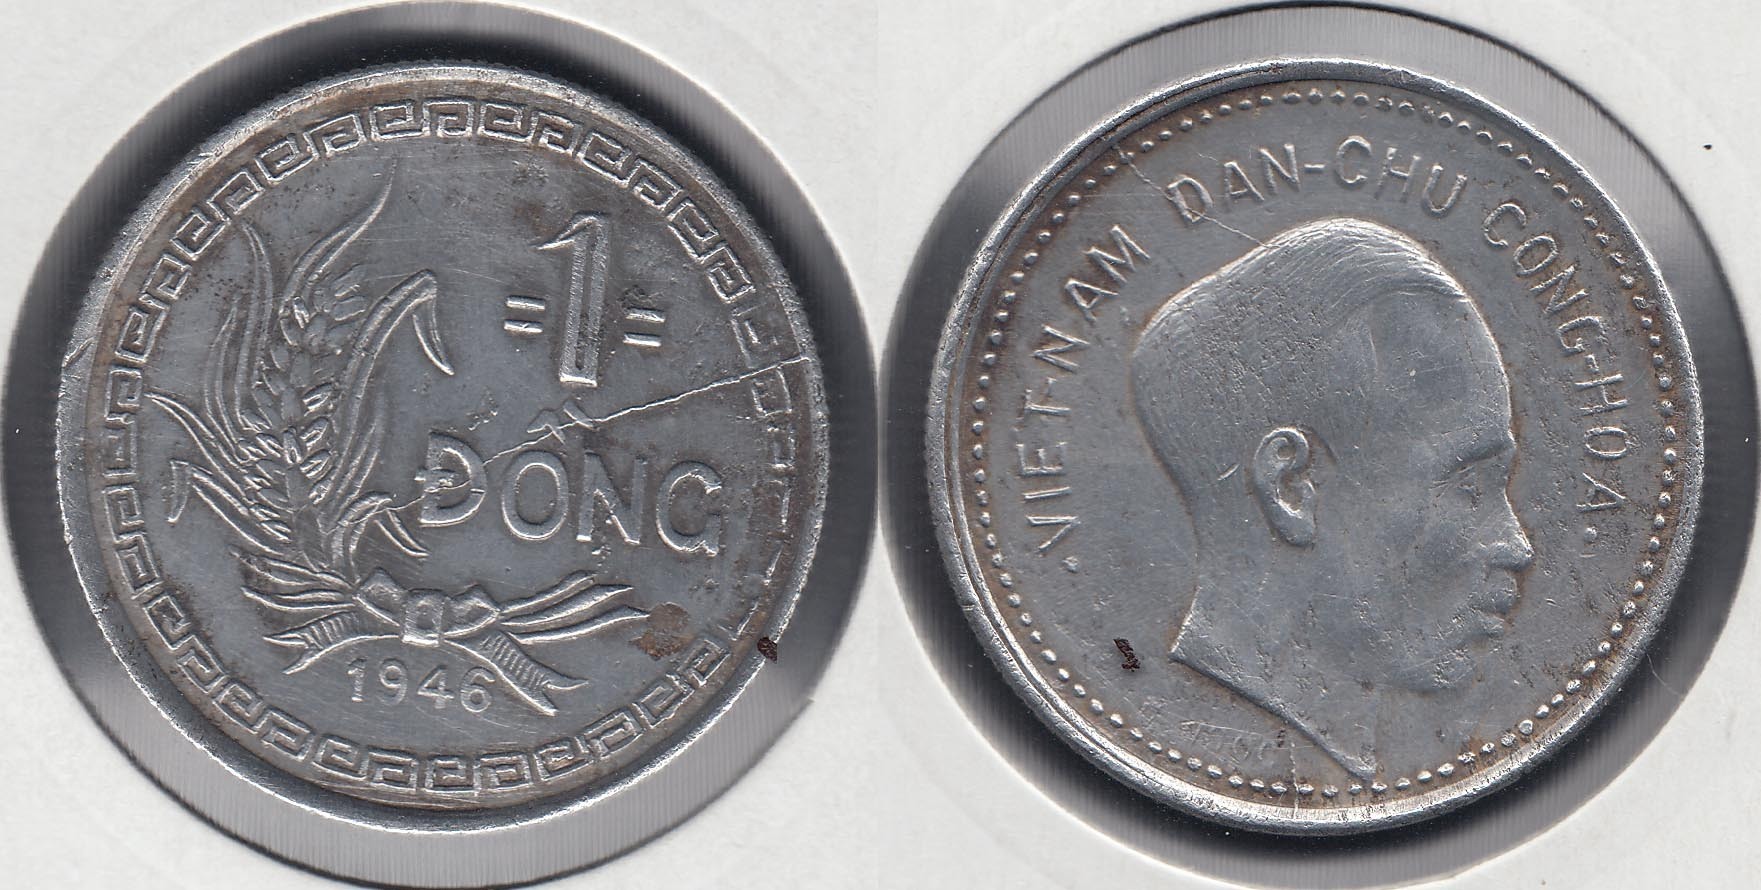 VIETNAM. ESTADO COMUNISTA REBELDE. 1 DONG DE 1946.